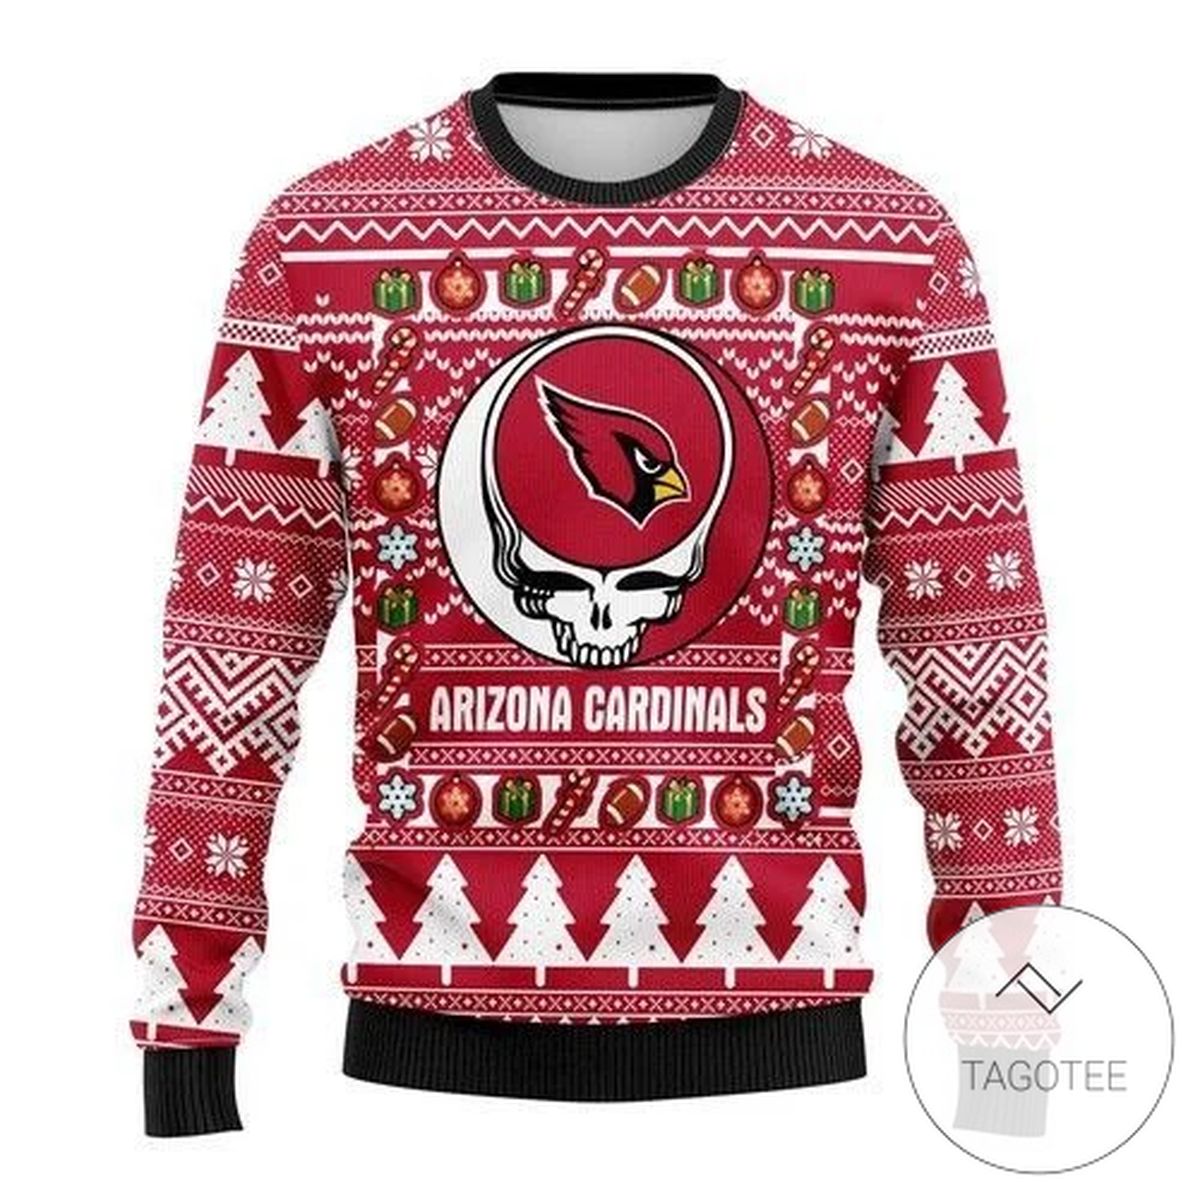 Arizona Cardinals Grateful Dead Sweatshirt Knitted Ugly Christmas Sweater